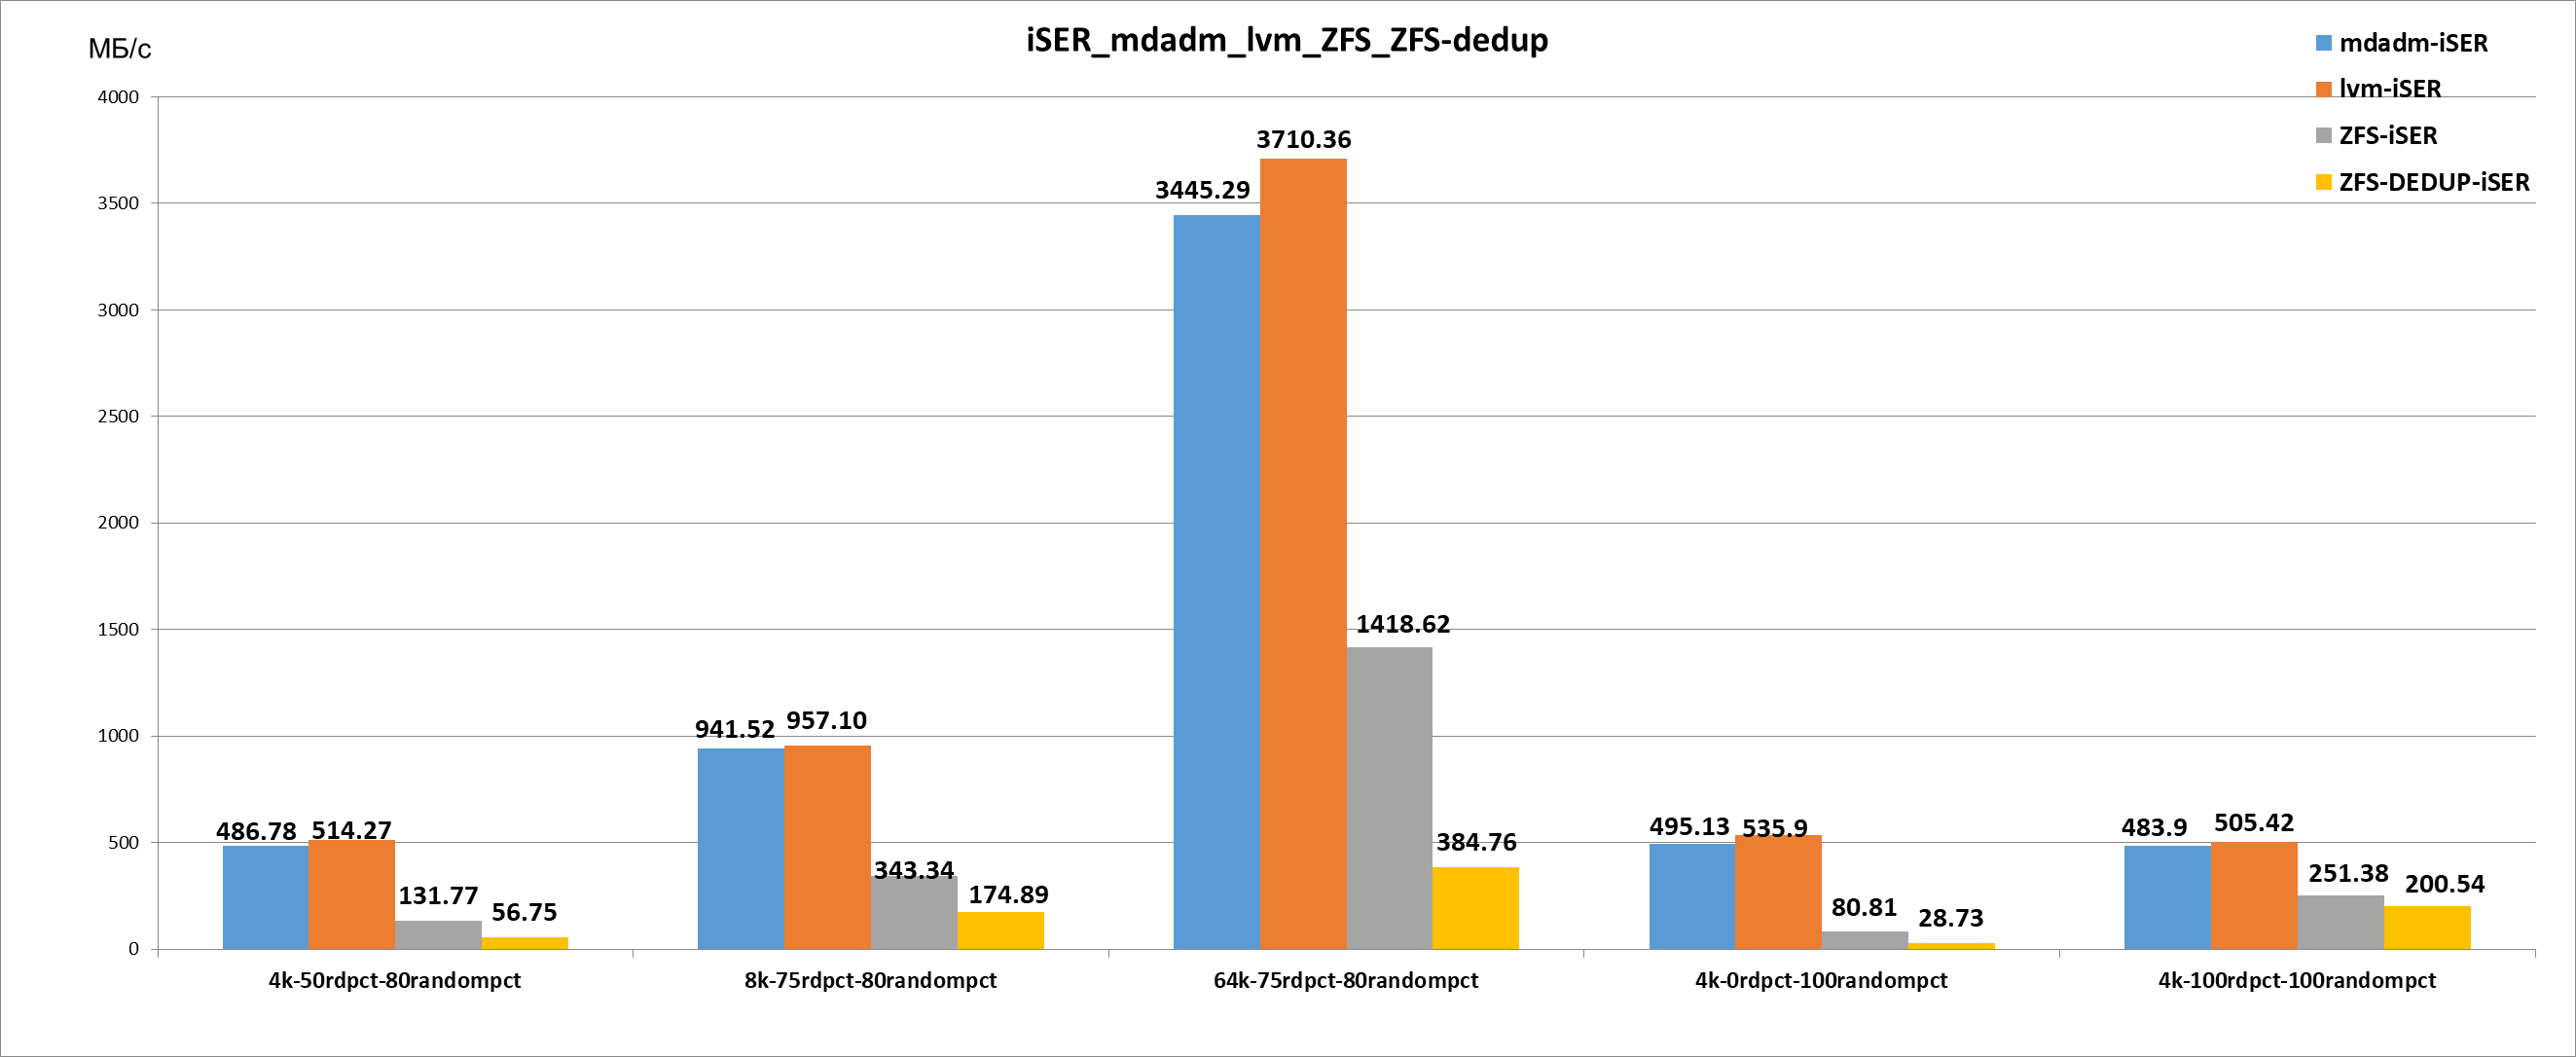 mdadm - синий, LVM - оранжевый, ZFS - серый, ZFS-dedup - жёлтый